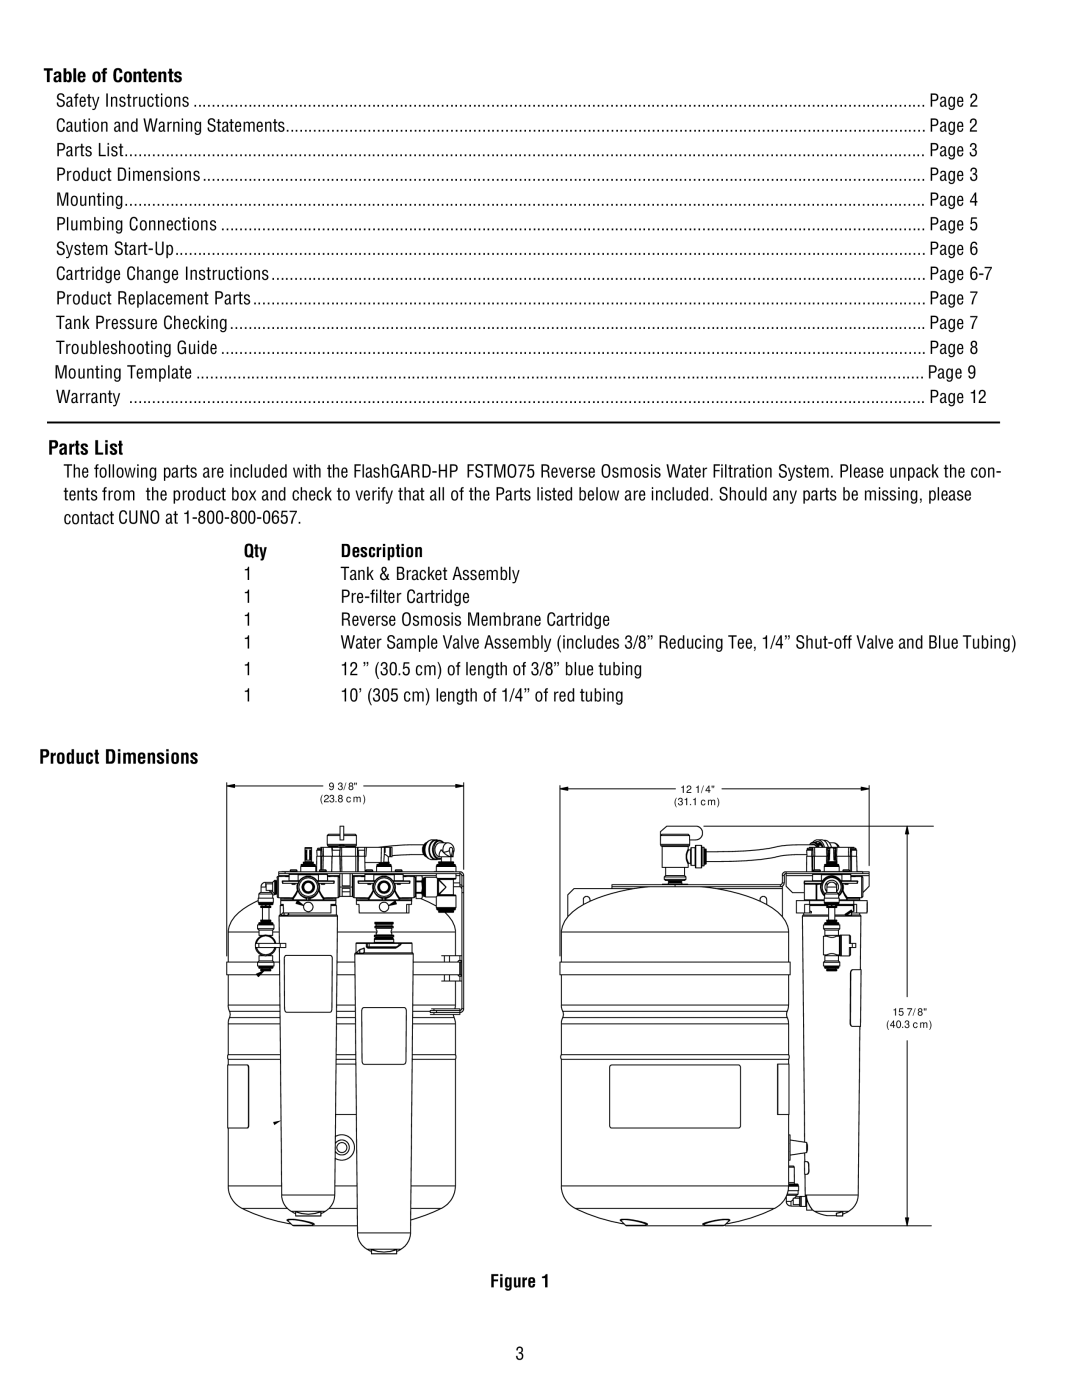 3M FSTMO75 manual Parts List, Product Dimensions 